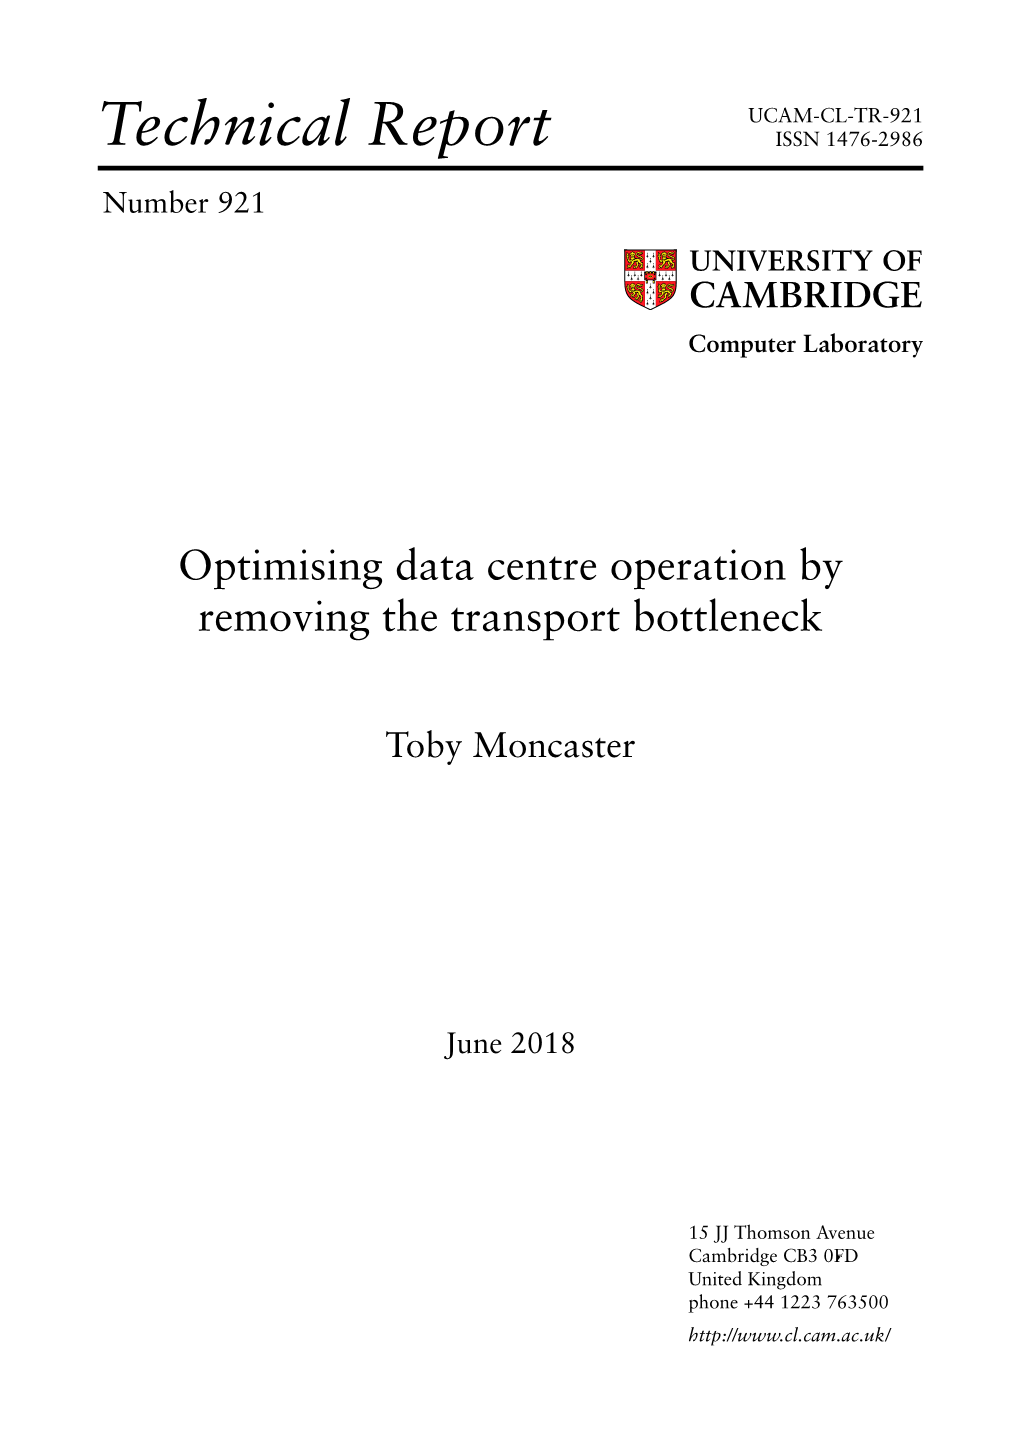 Optimising Data Centre Operation by Removing the Transport Bottleneck